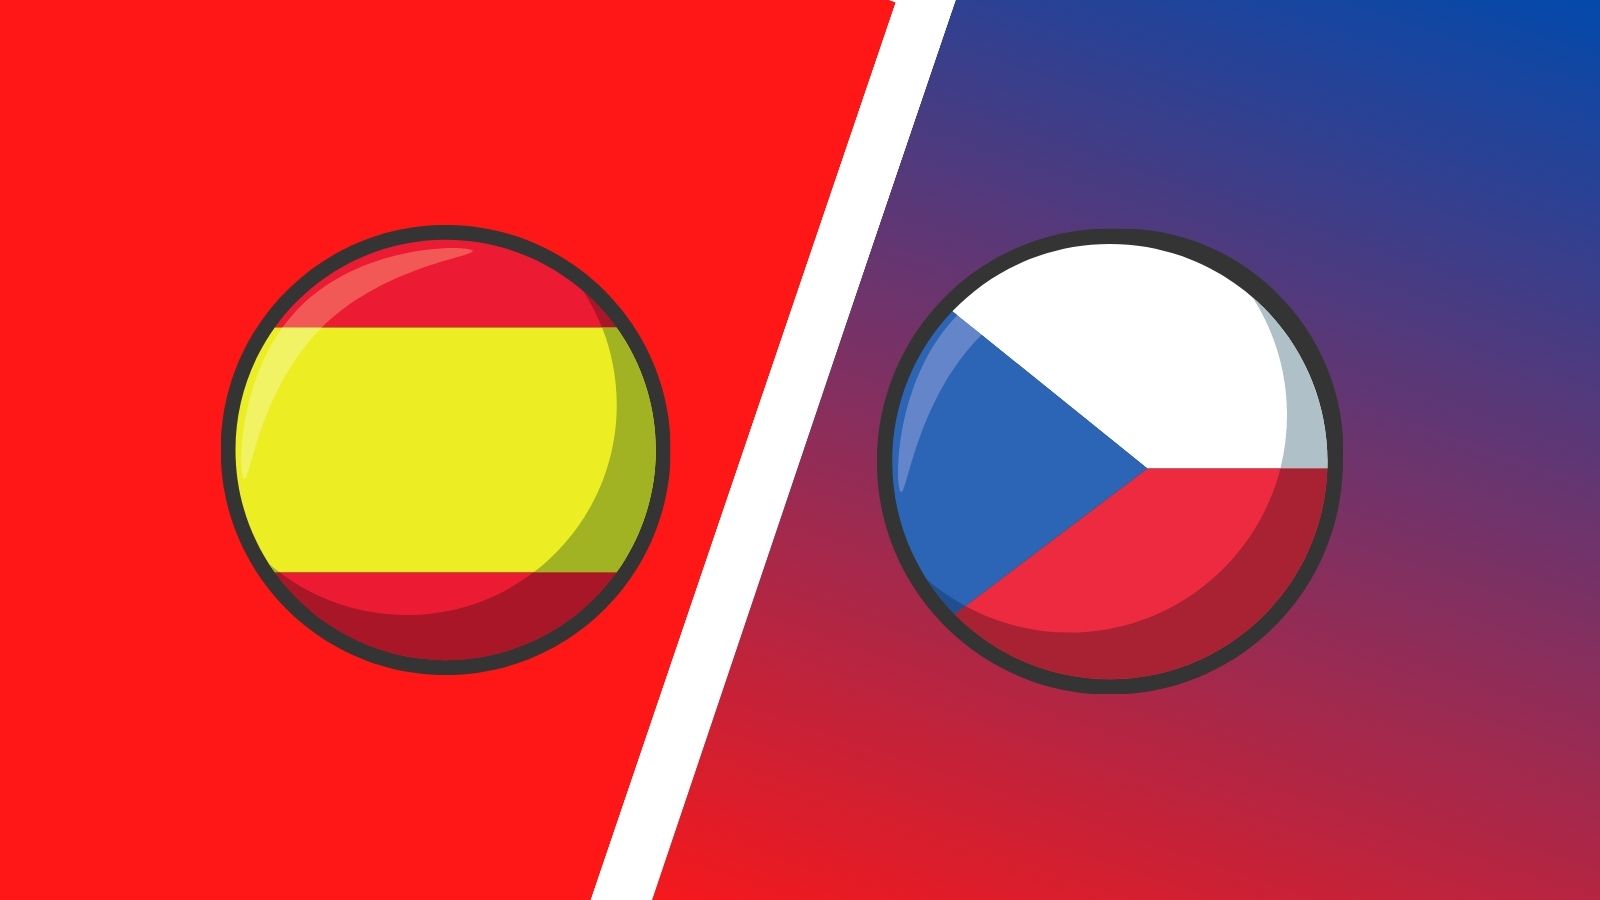 Spain vs Czech Republic Match Preview & Predictions